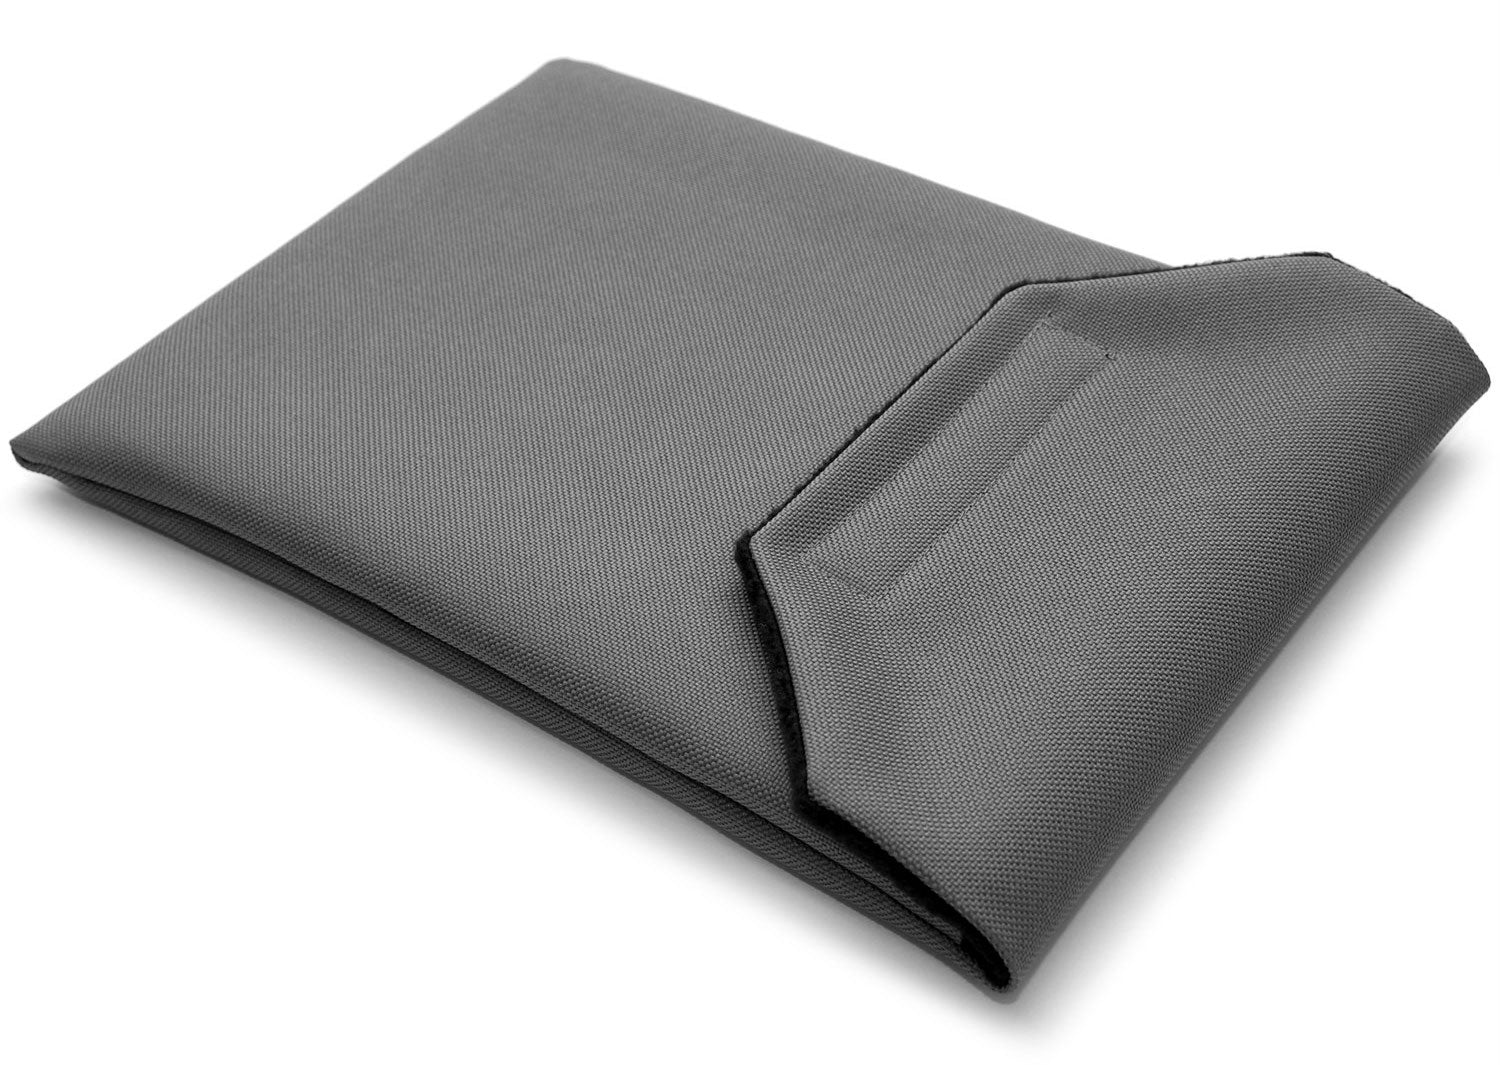 Ipad air 4th gen sleeve case - canvas - grey